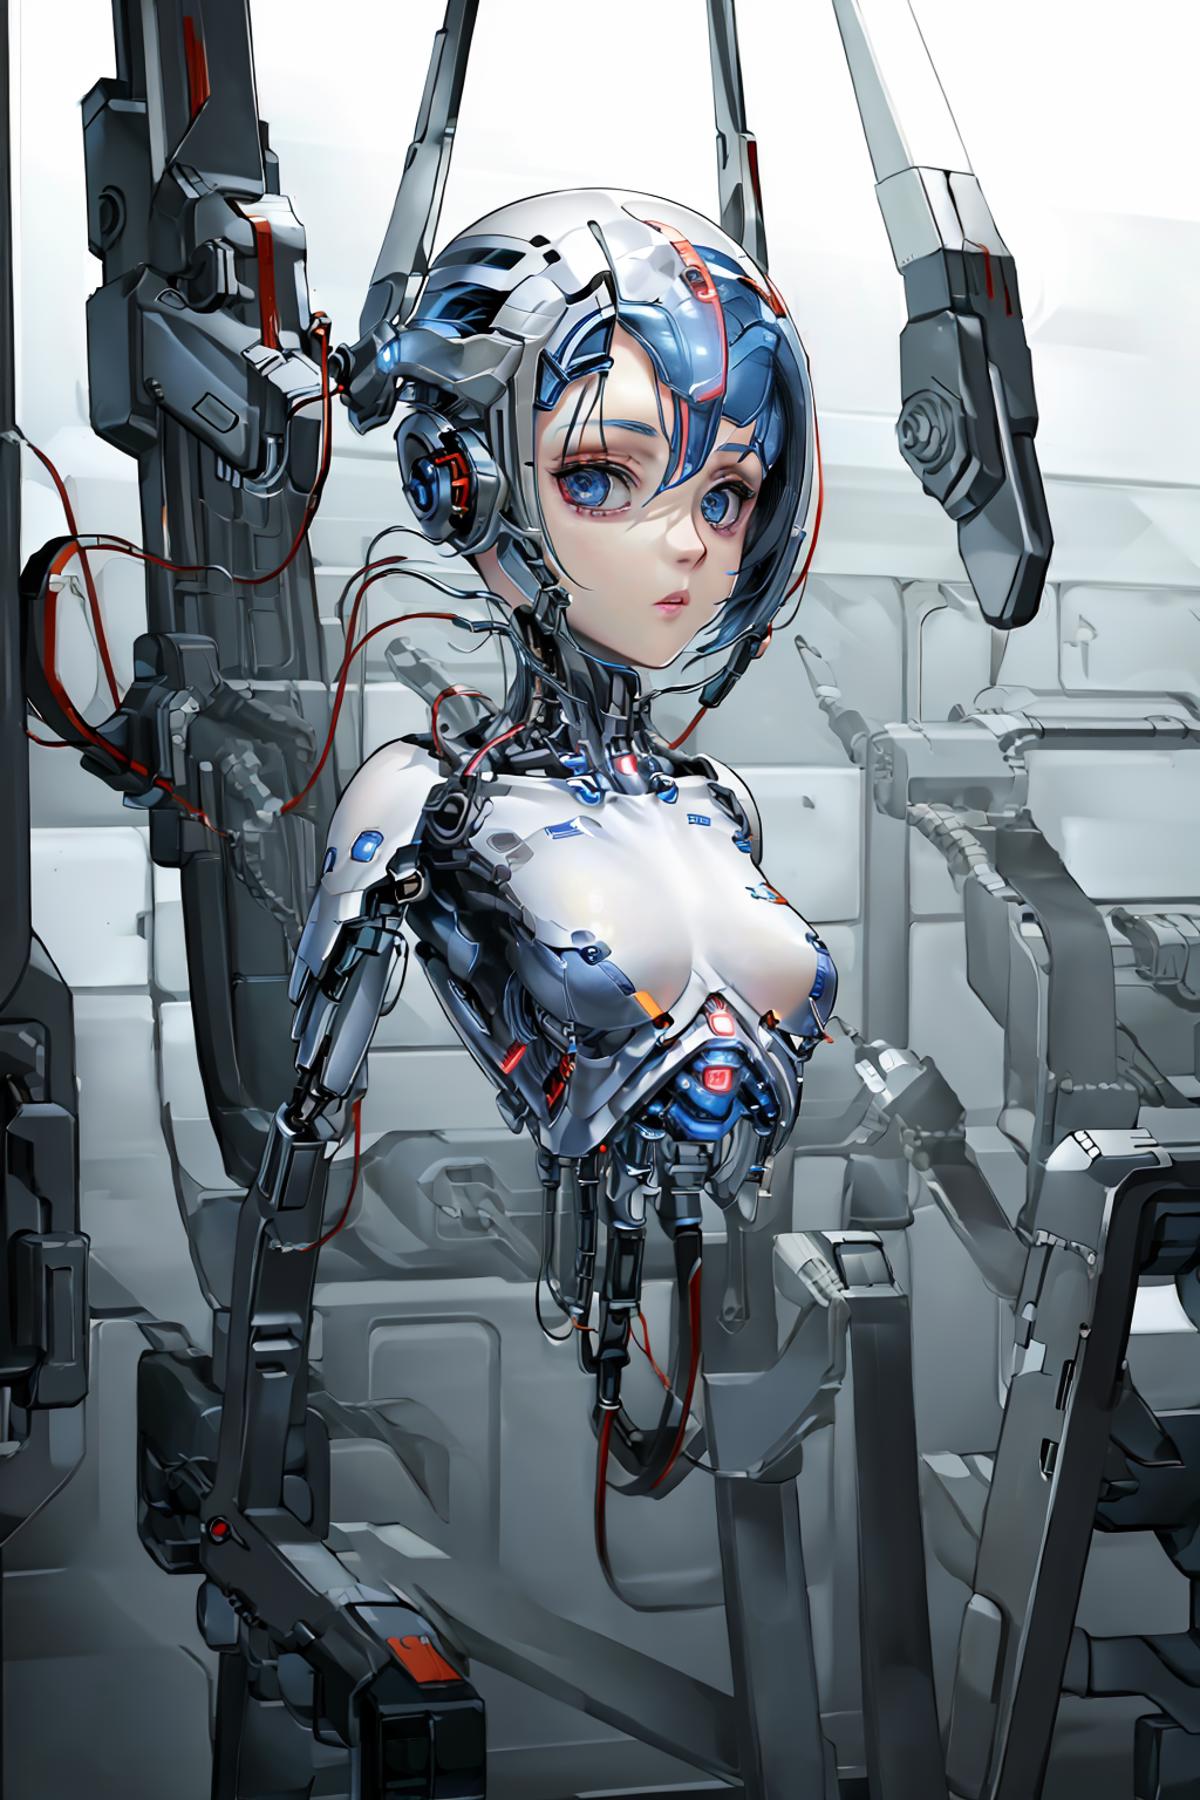 AI model image by gynoidneko